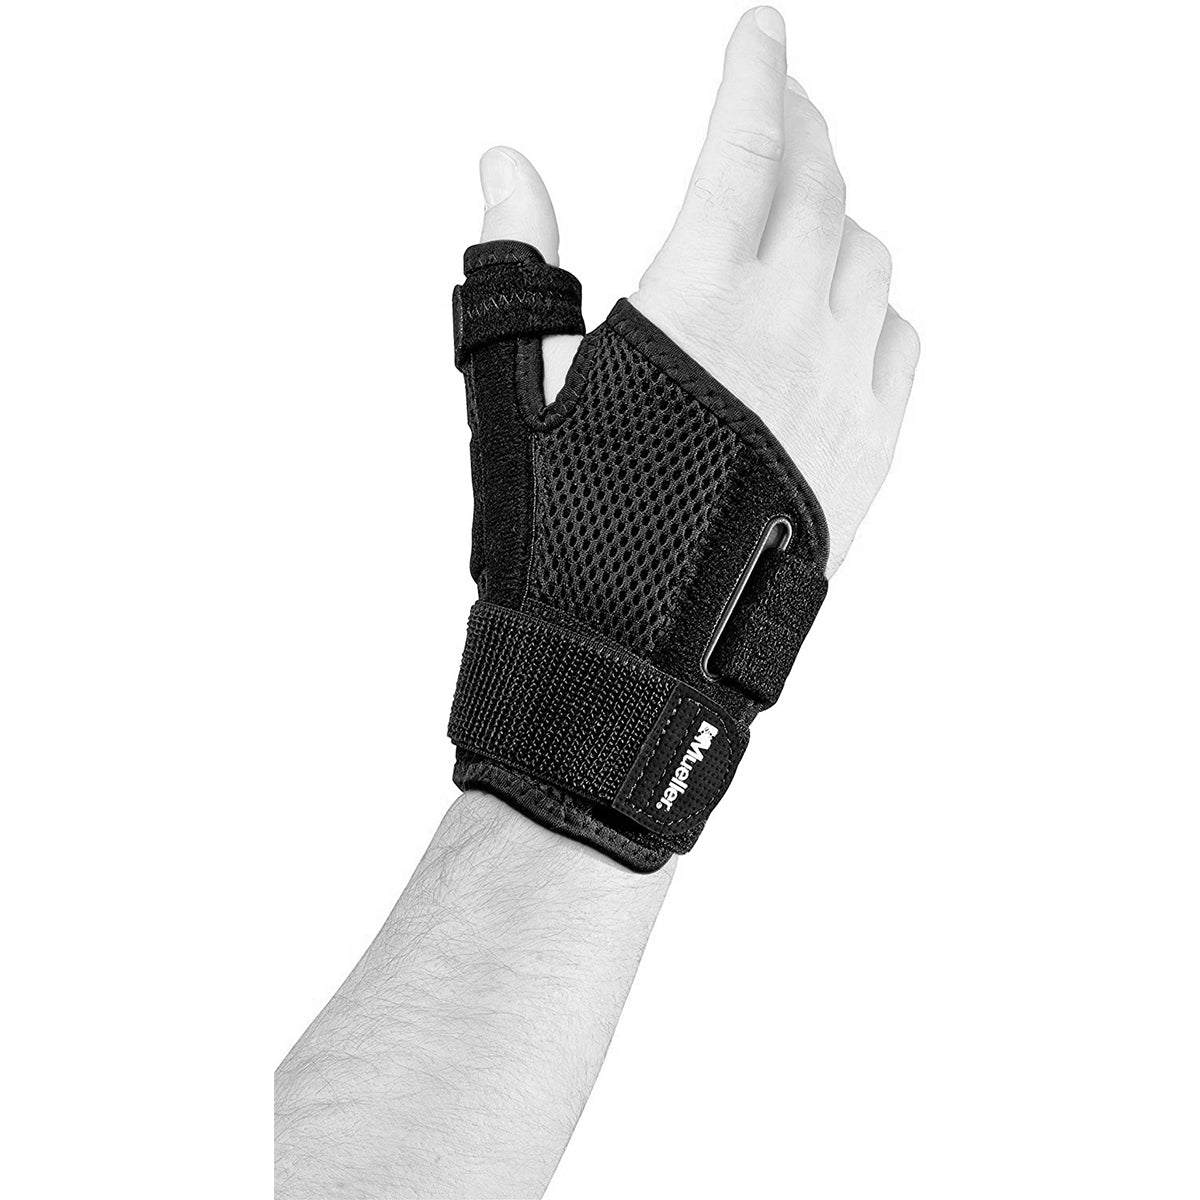 Mueller Sport Care Reversible Thumb Stabilizer - Black Mueller Sports Medicine